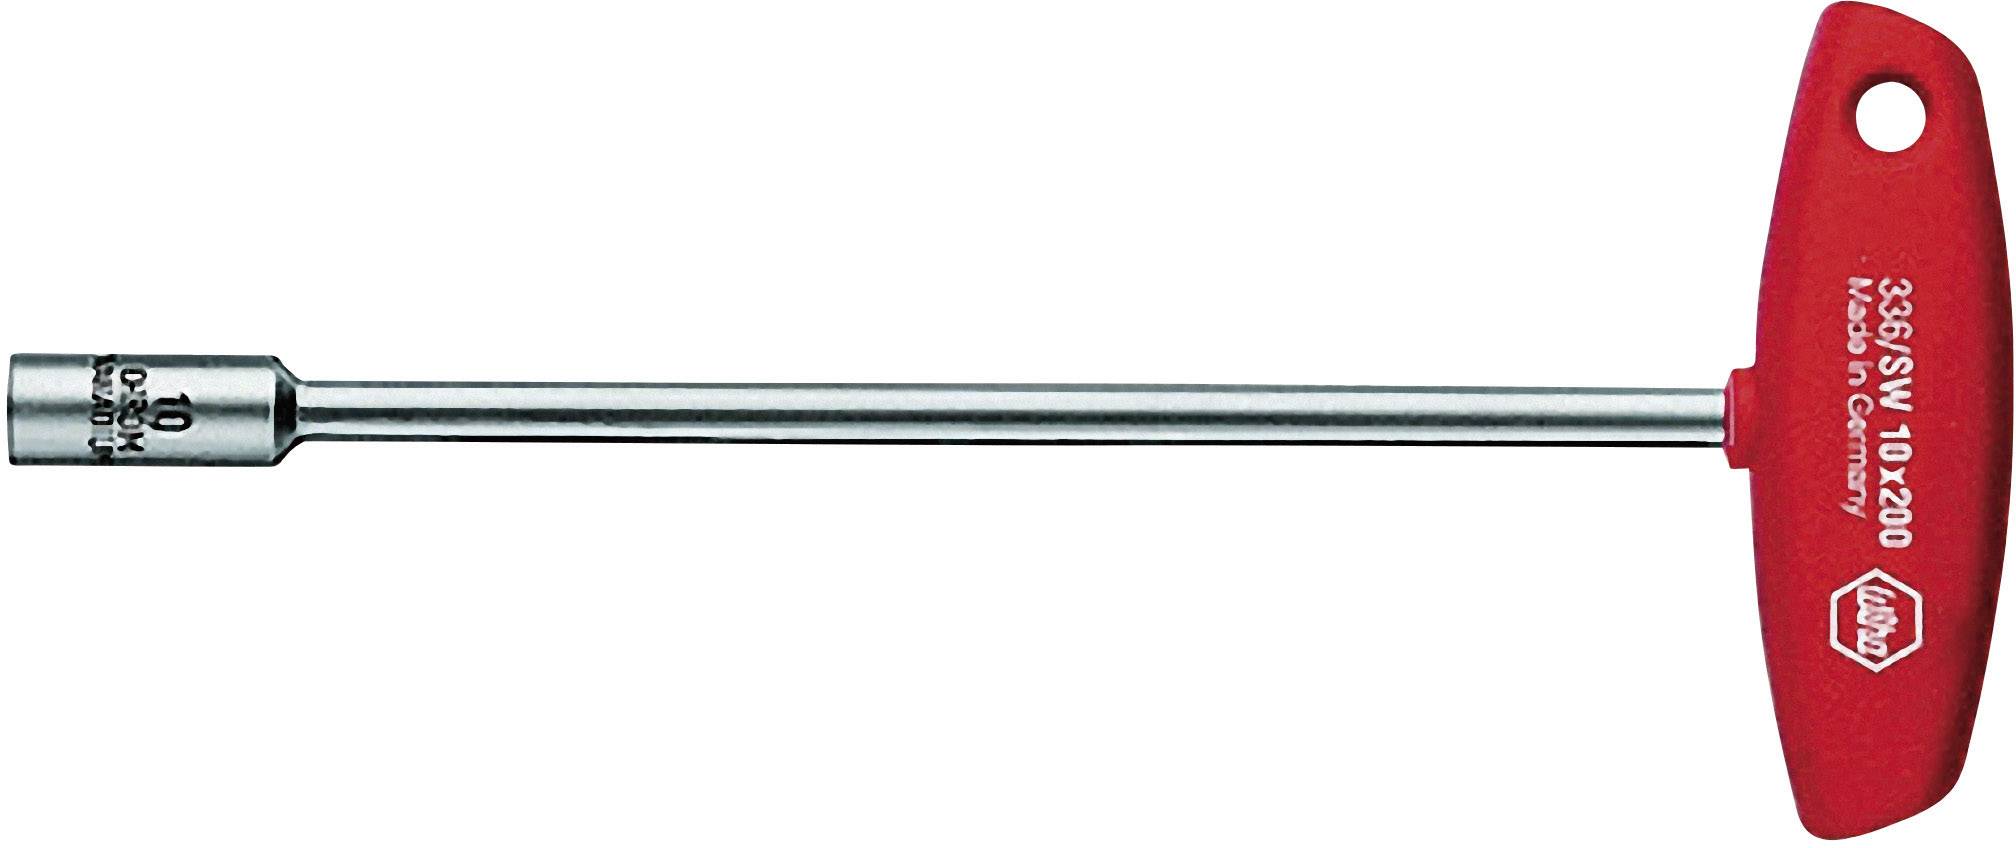 Wiha 336 Workshop Socket Wrench Spanner Size Metric 14 Mm Blade